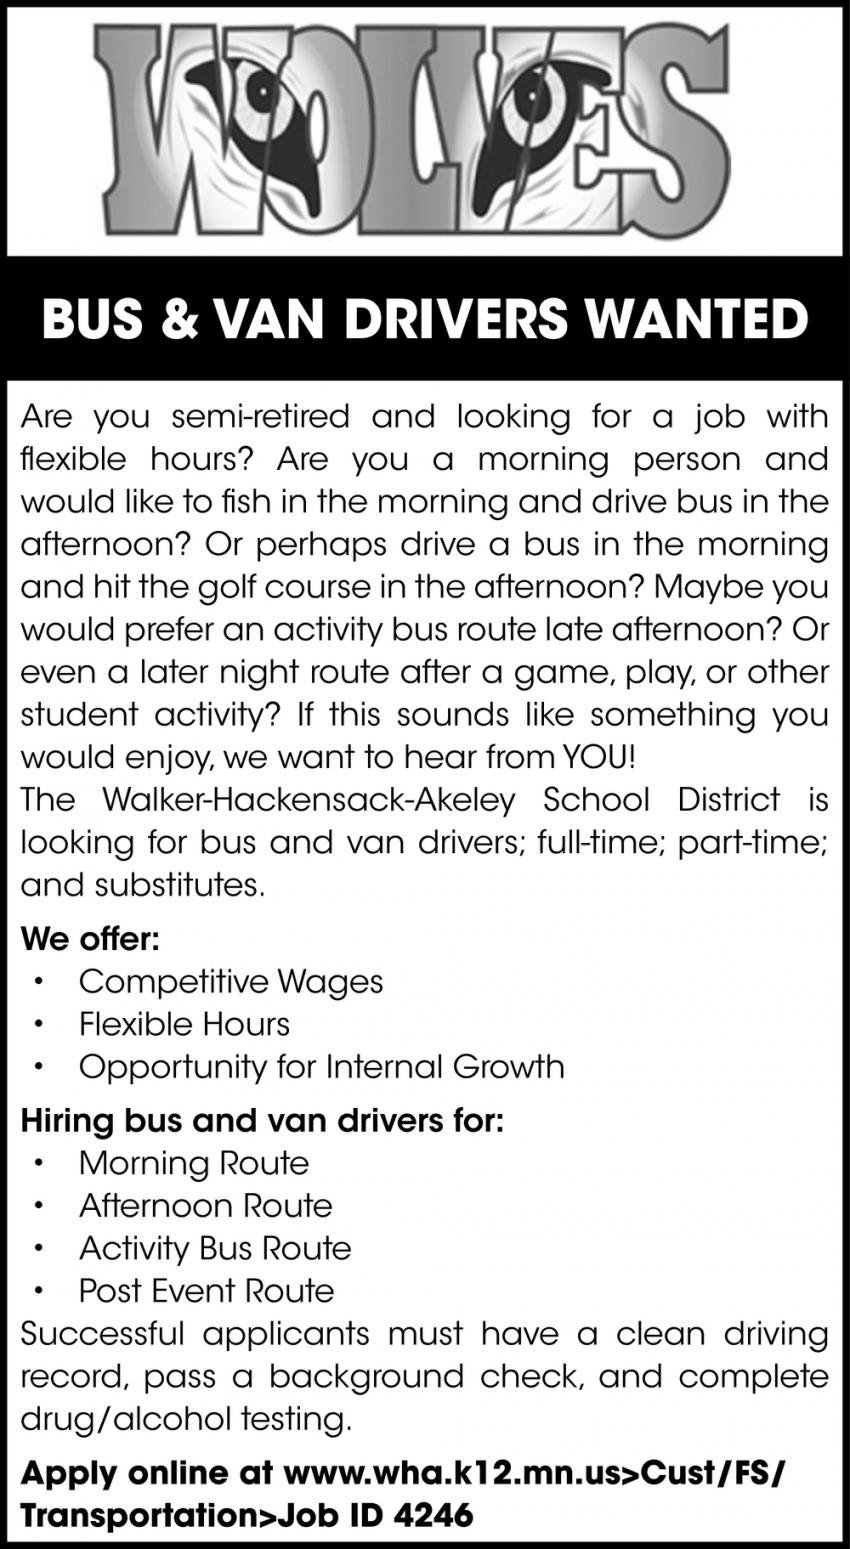 Bus & Van Drivers Wanted